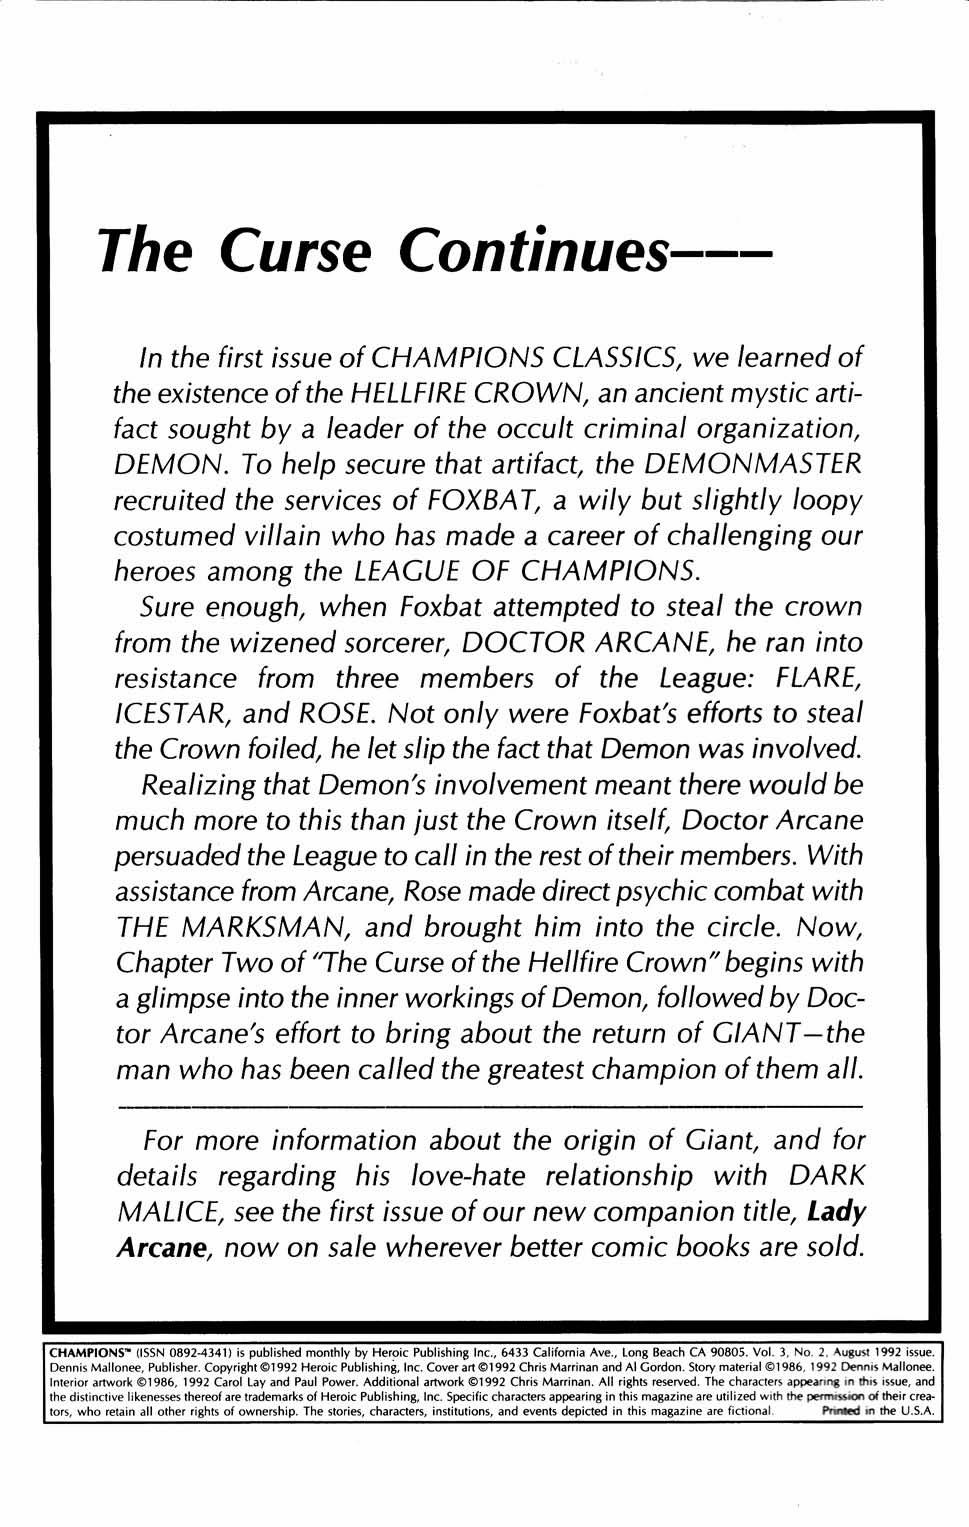 Read online Champions Classics comic -  Issue #2 - 2